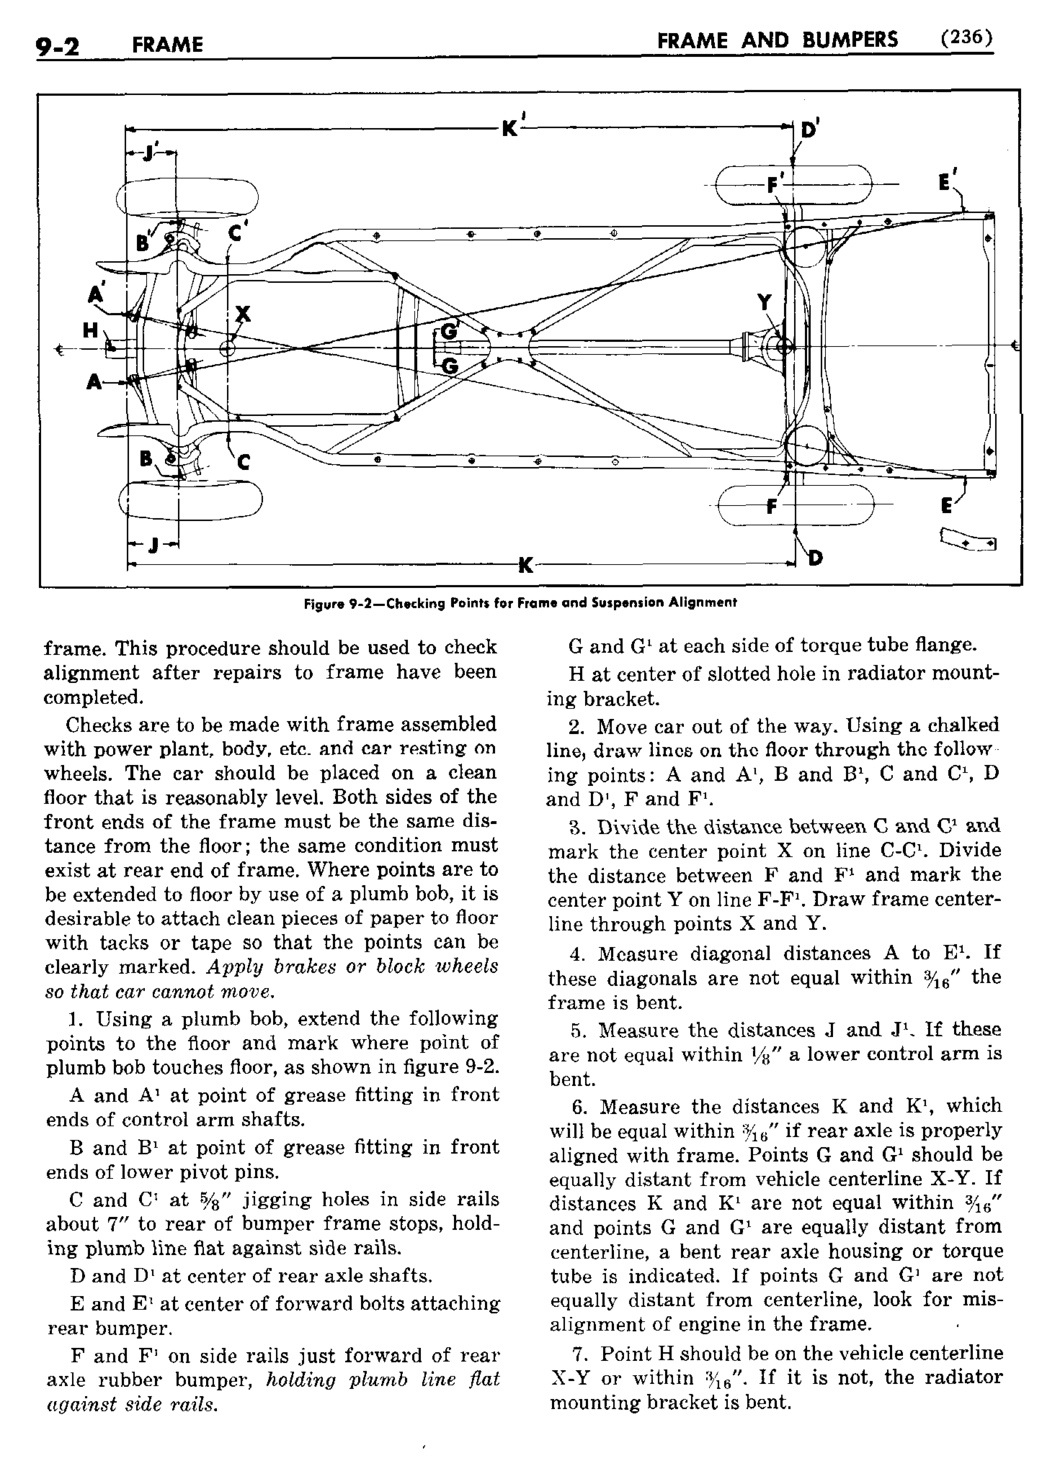 n_10 1950 Buick Shop Manual - Frame & Bumpers-002-002.jpg